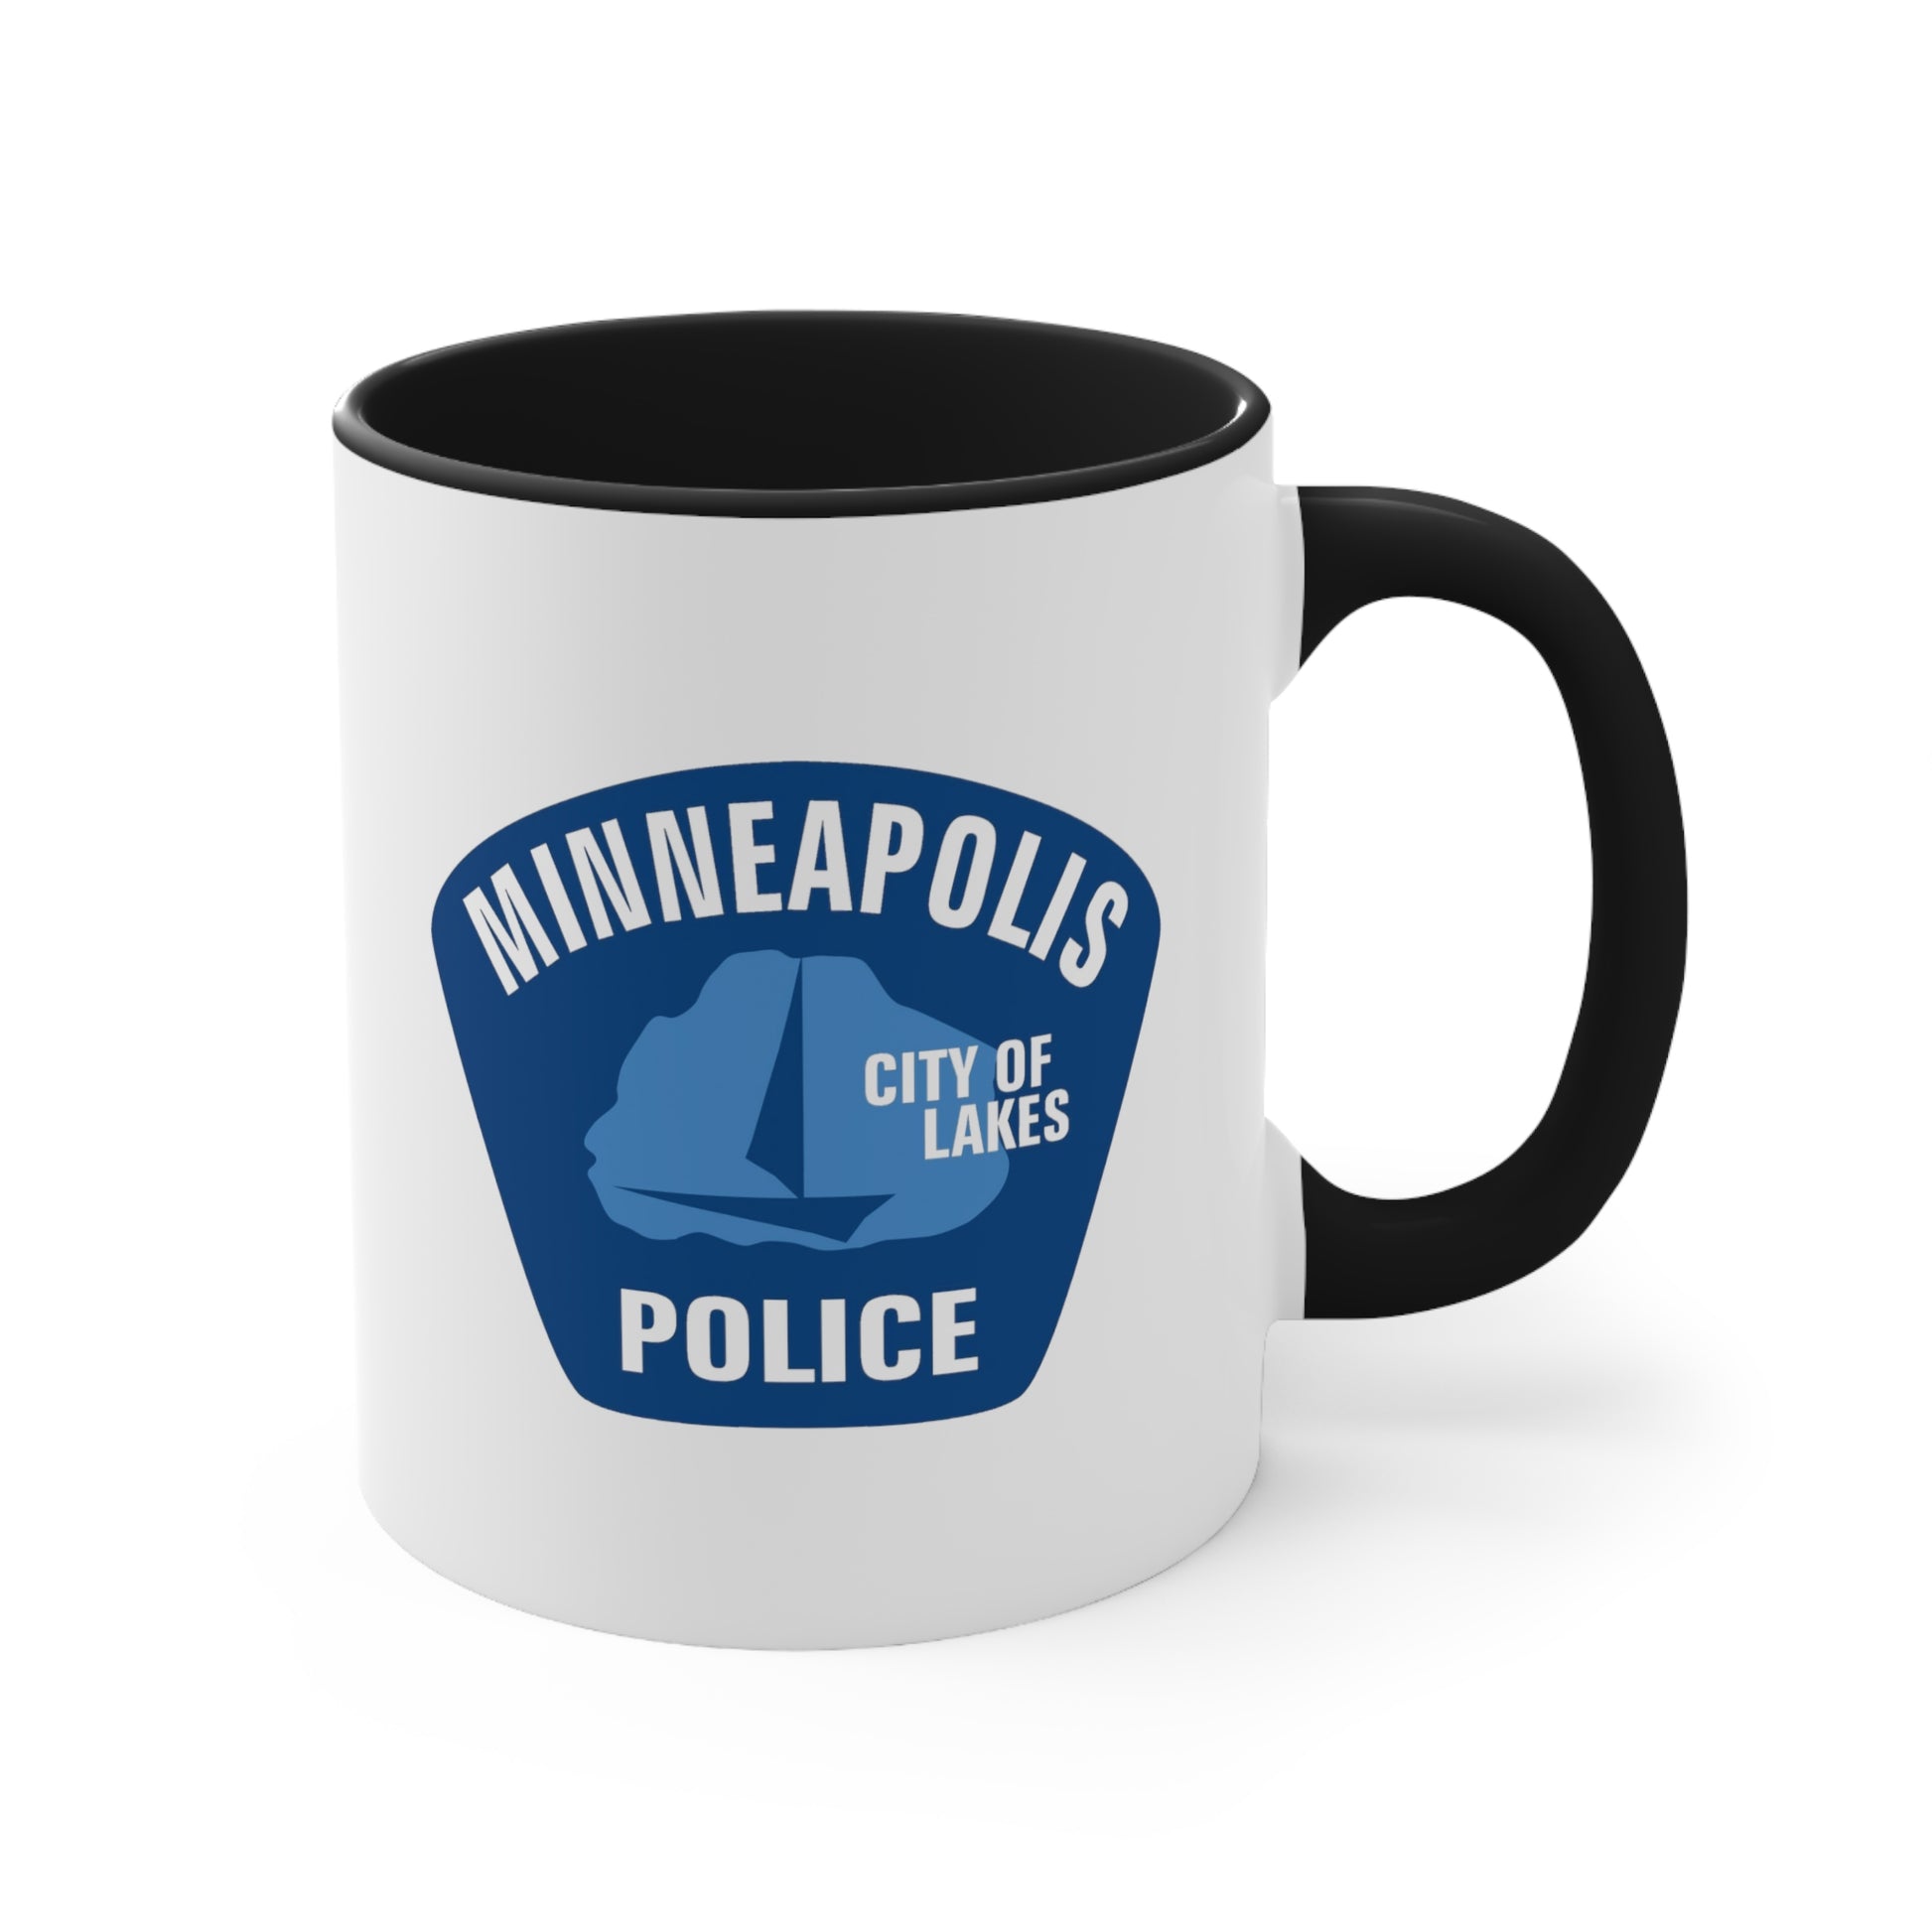 Minneapolis Police Coffee Mug - Double Sided Black Accent White Ceramic 11oz by TheGlassyLass.com